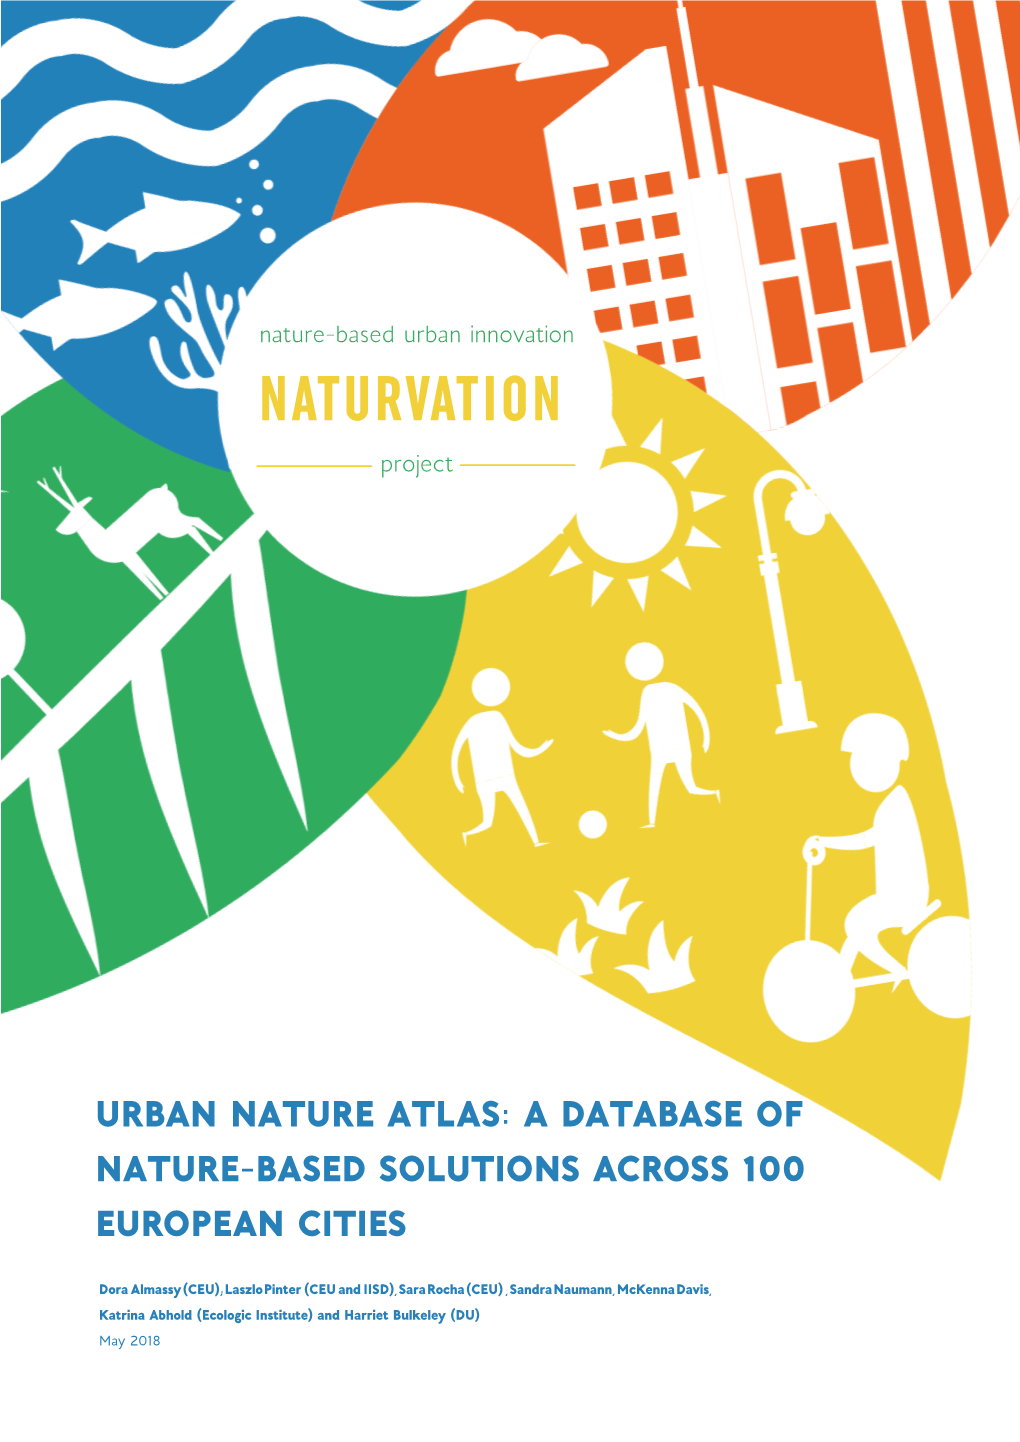 Urban Nature Solutions Across 100 European Cities